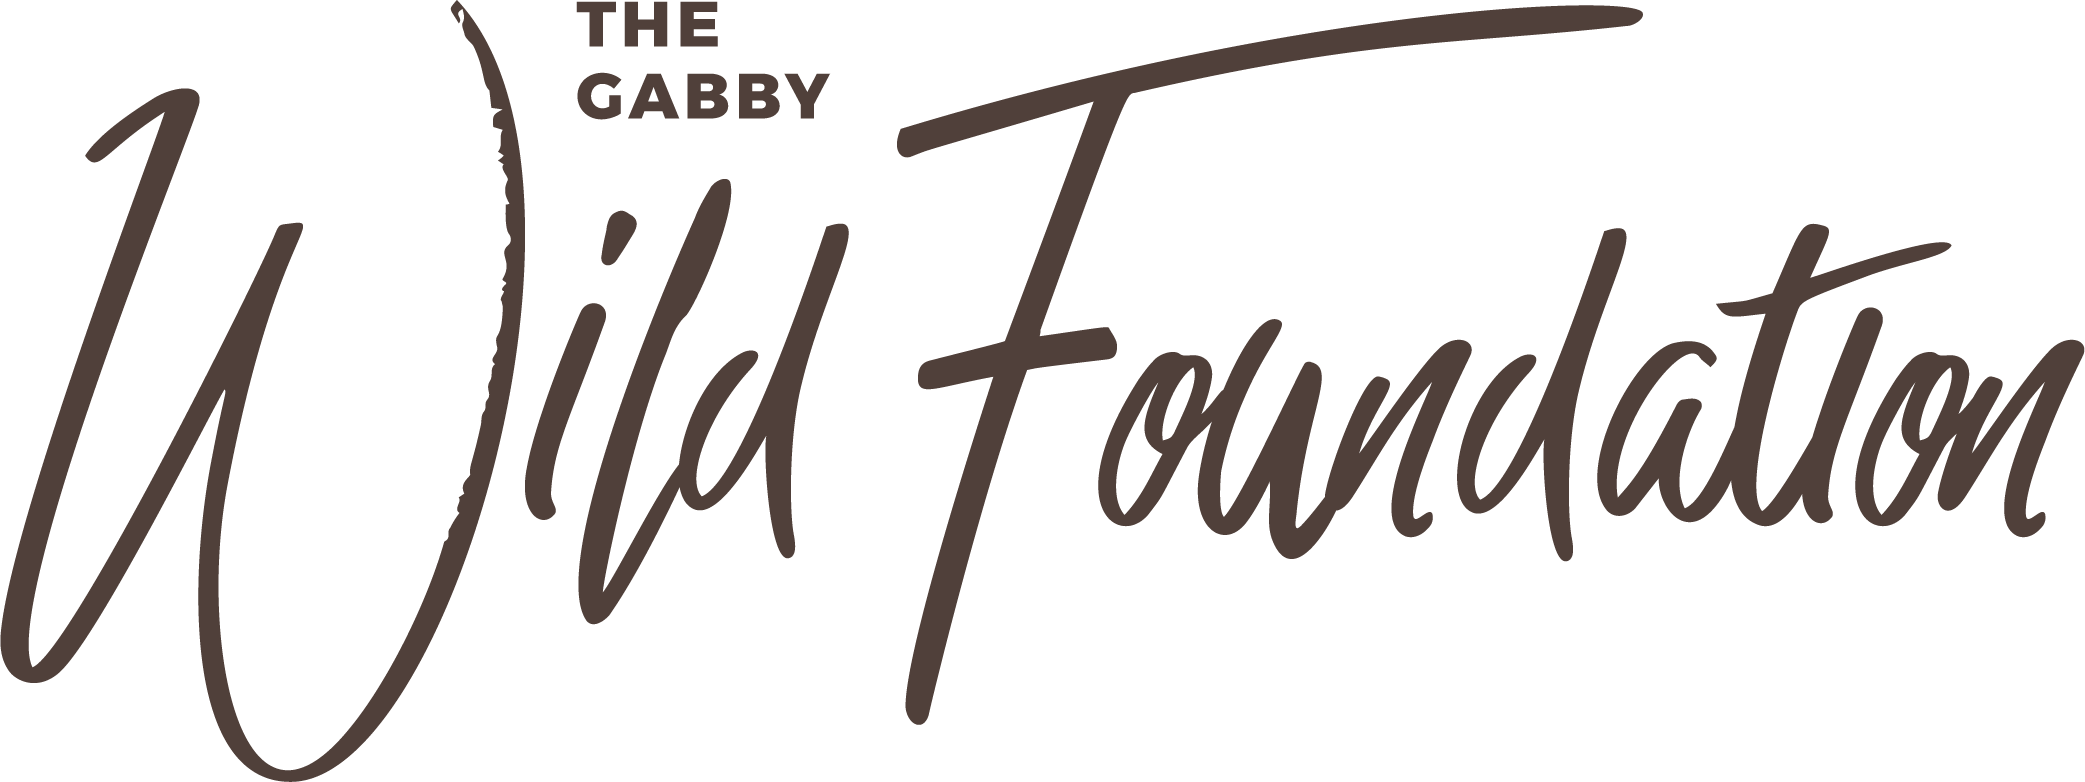 The Gabby Wild Foundation, Inc. logo